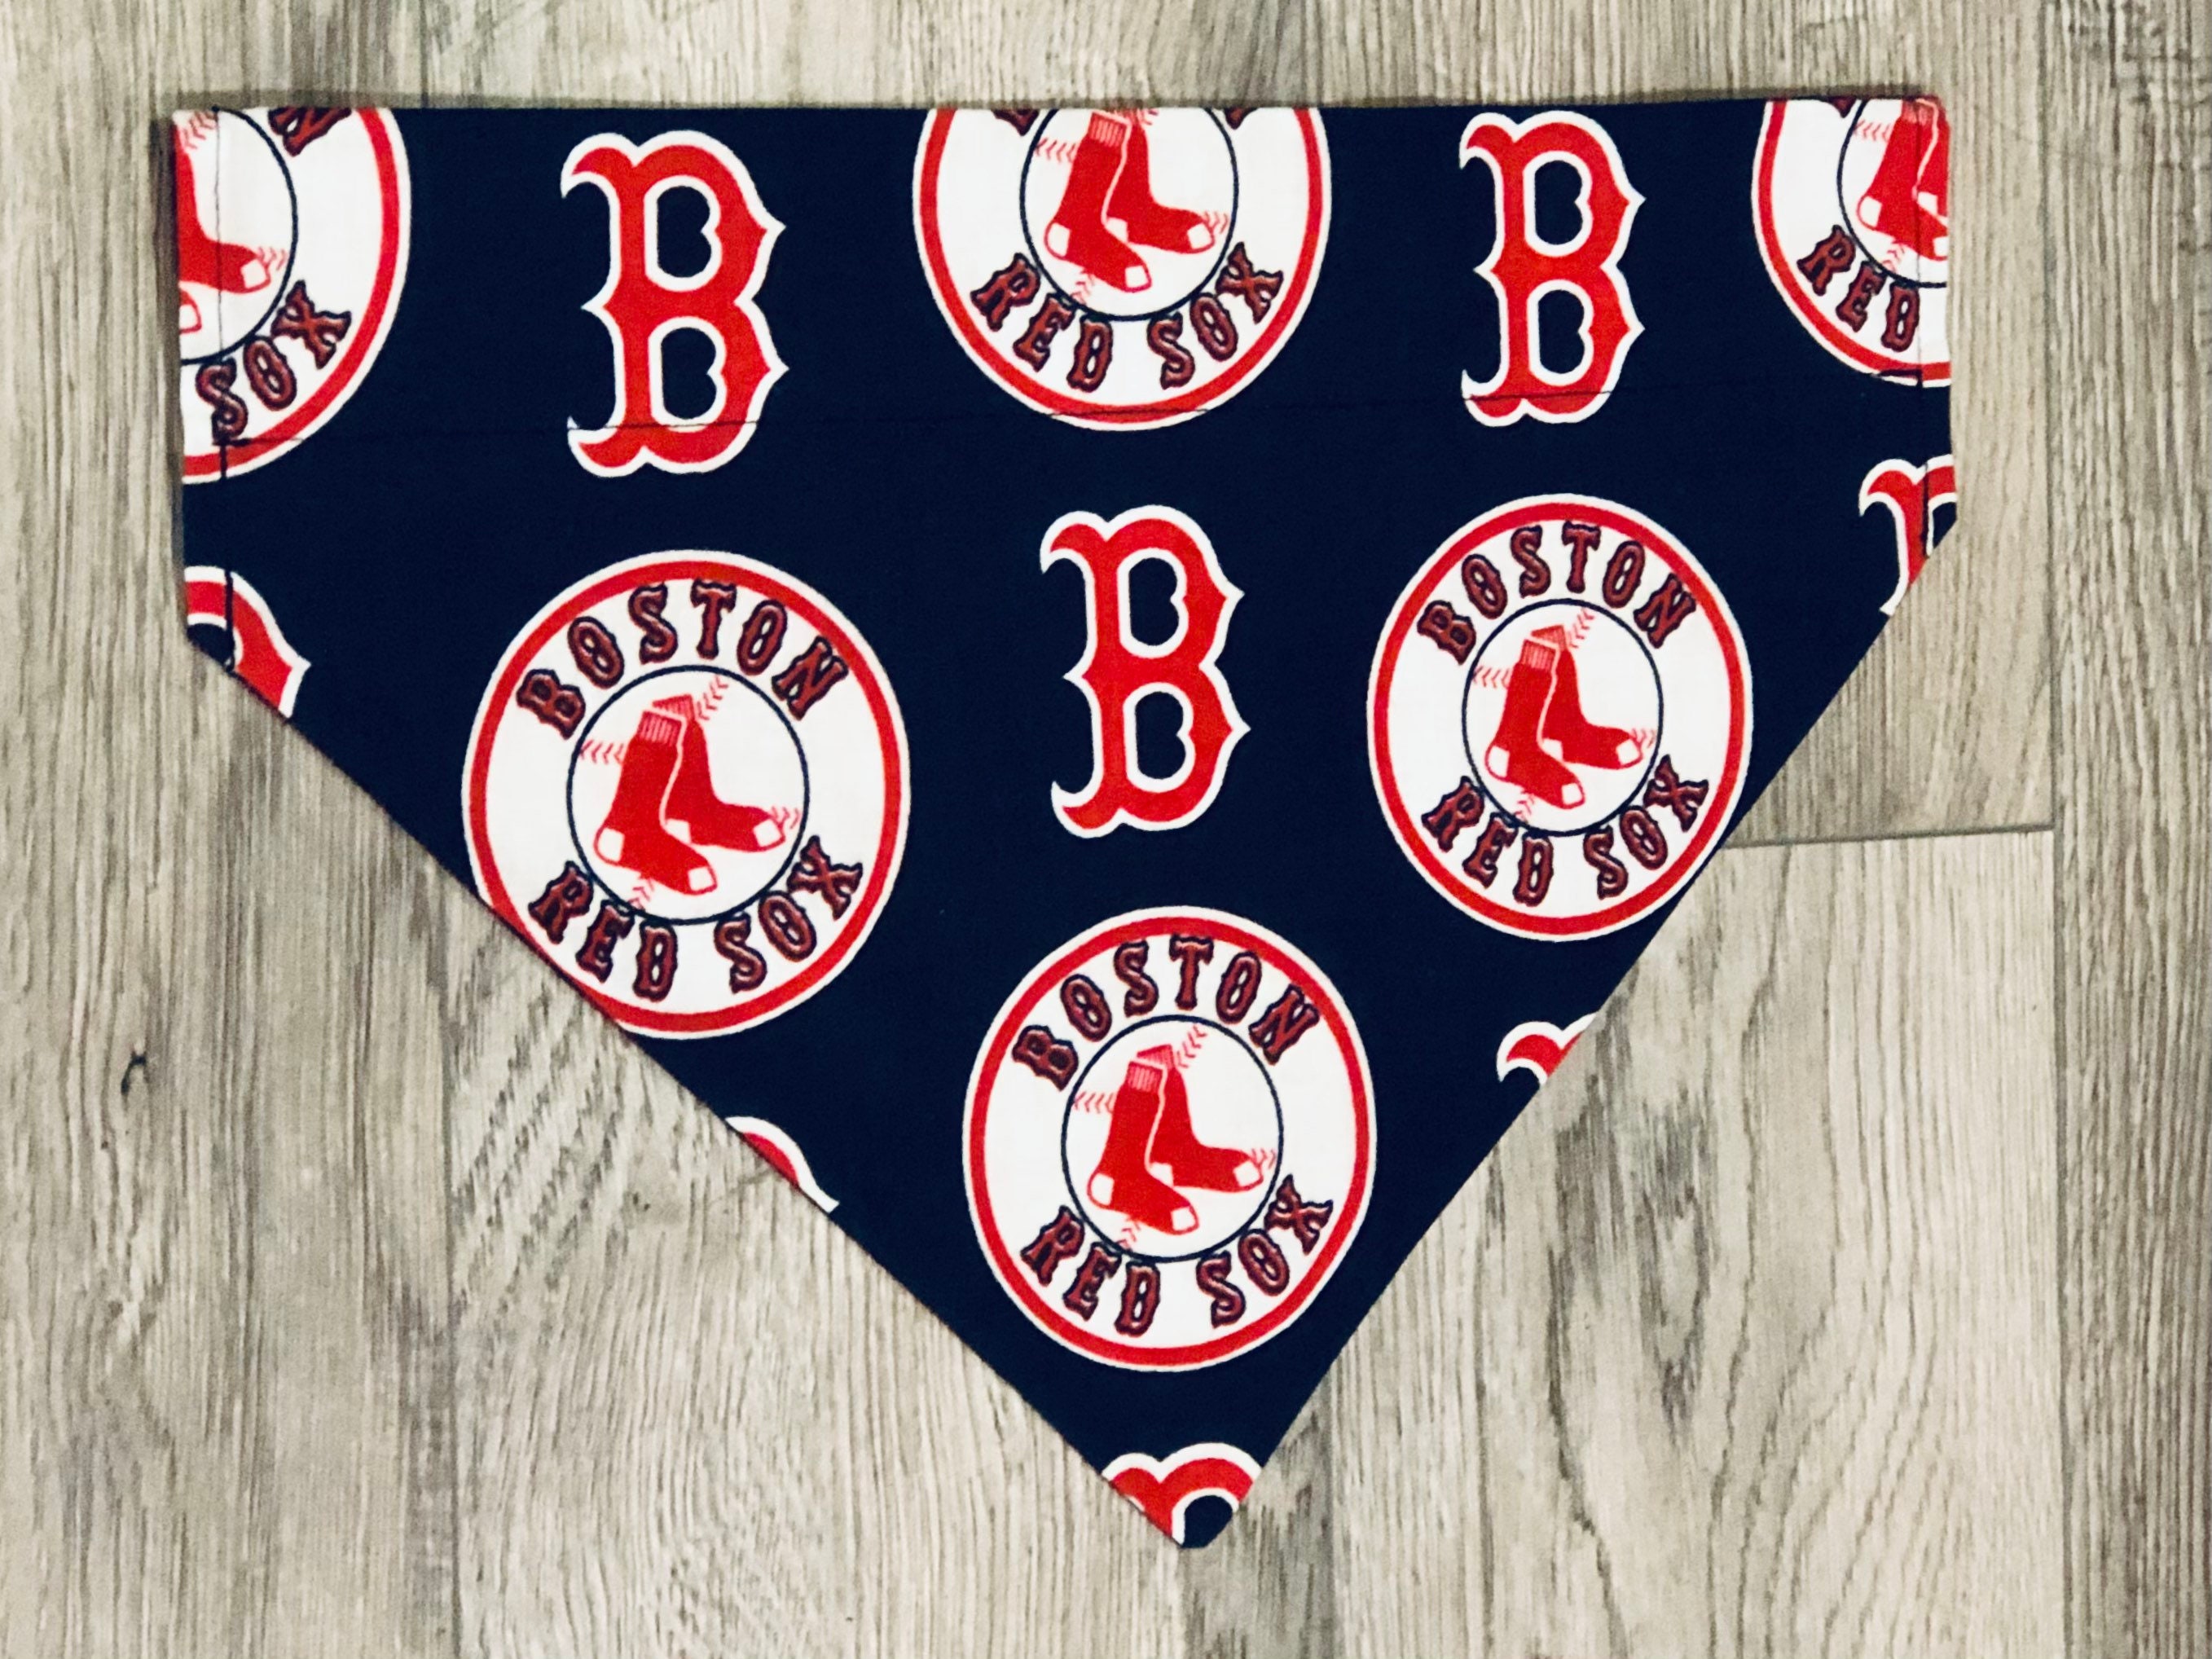 MLB Boston Red Sox Dog Jersey Large